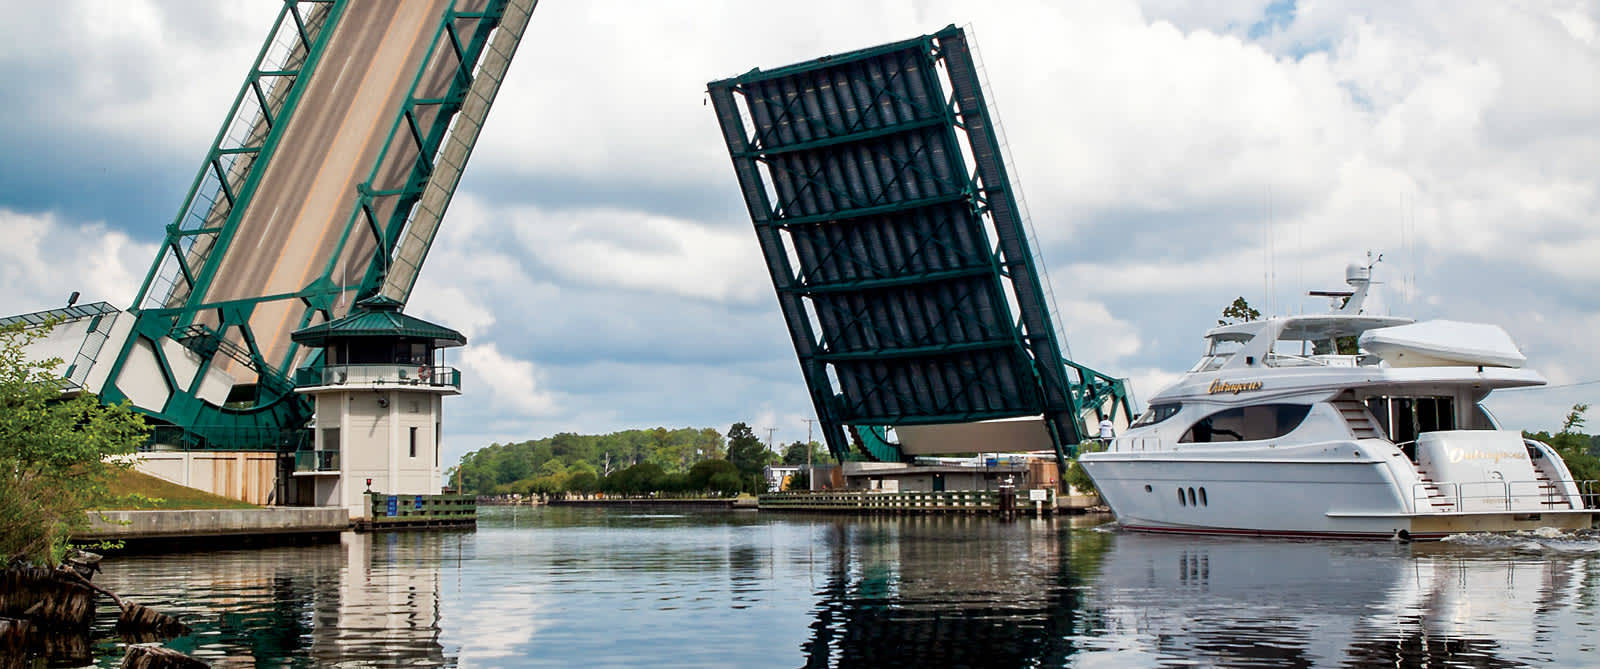 Chesapeake's The Great Bridge Opening Up Wallpaper